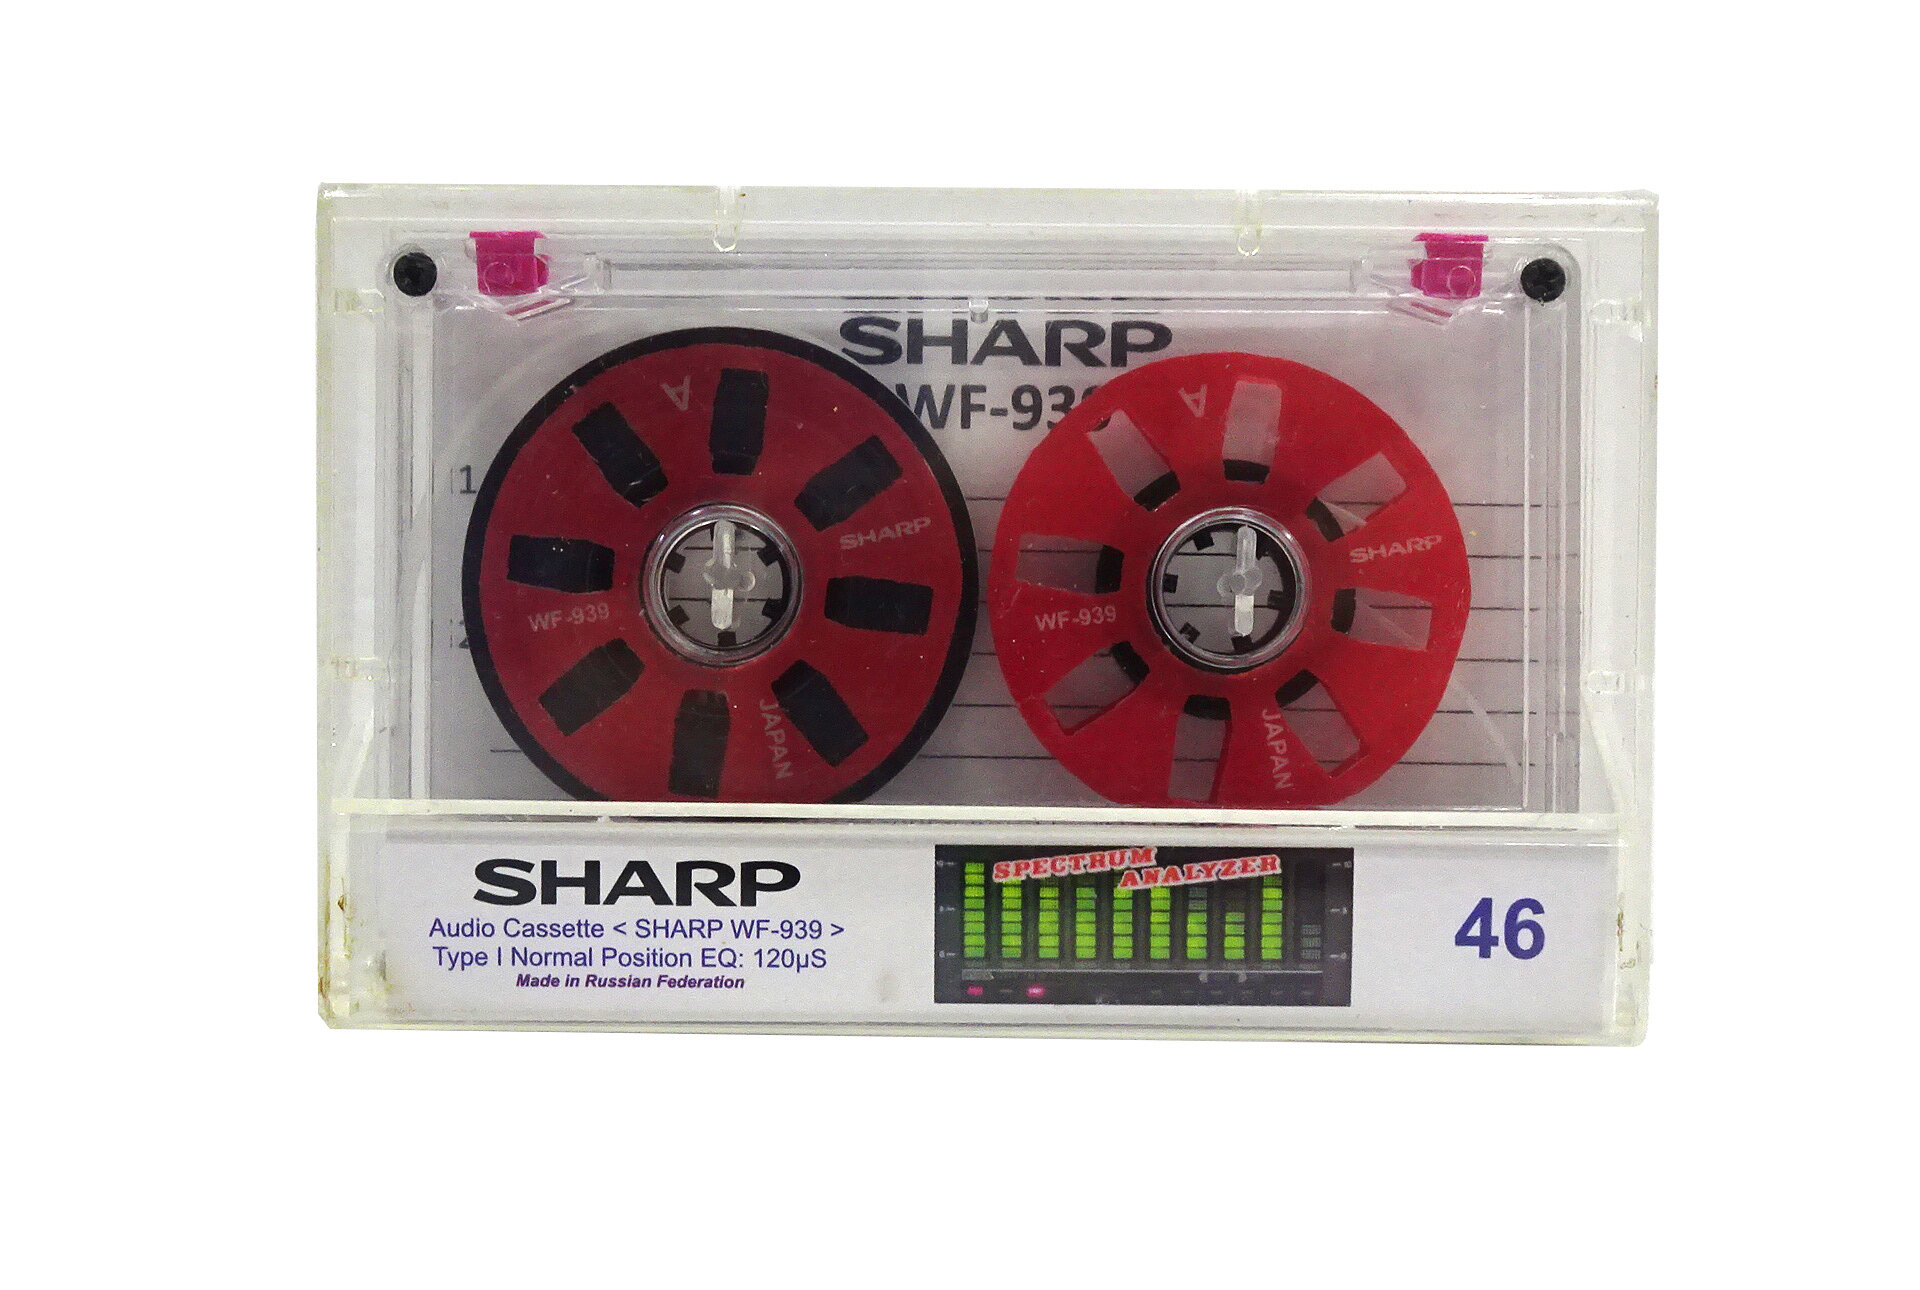 Аудиокассета "Sharp WF-939" с боббинками цвета красный металлик